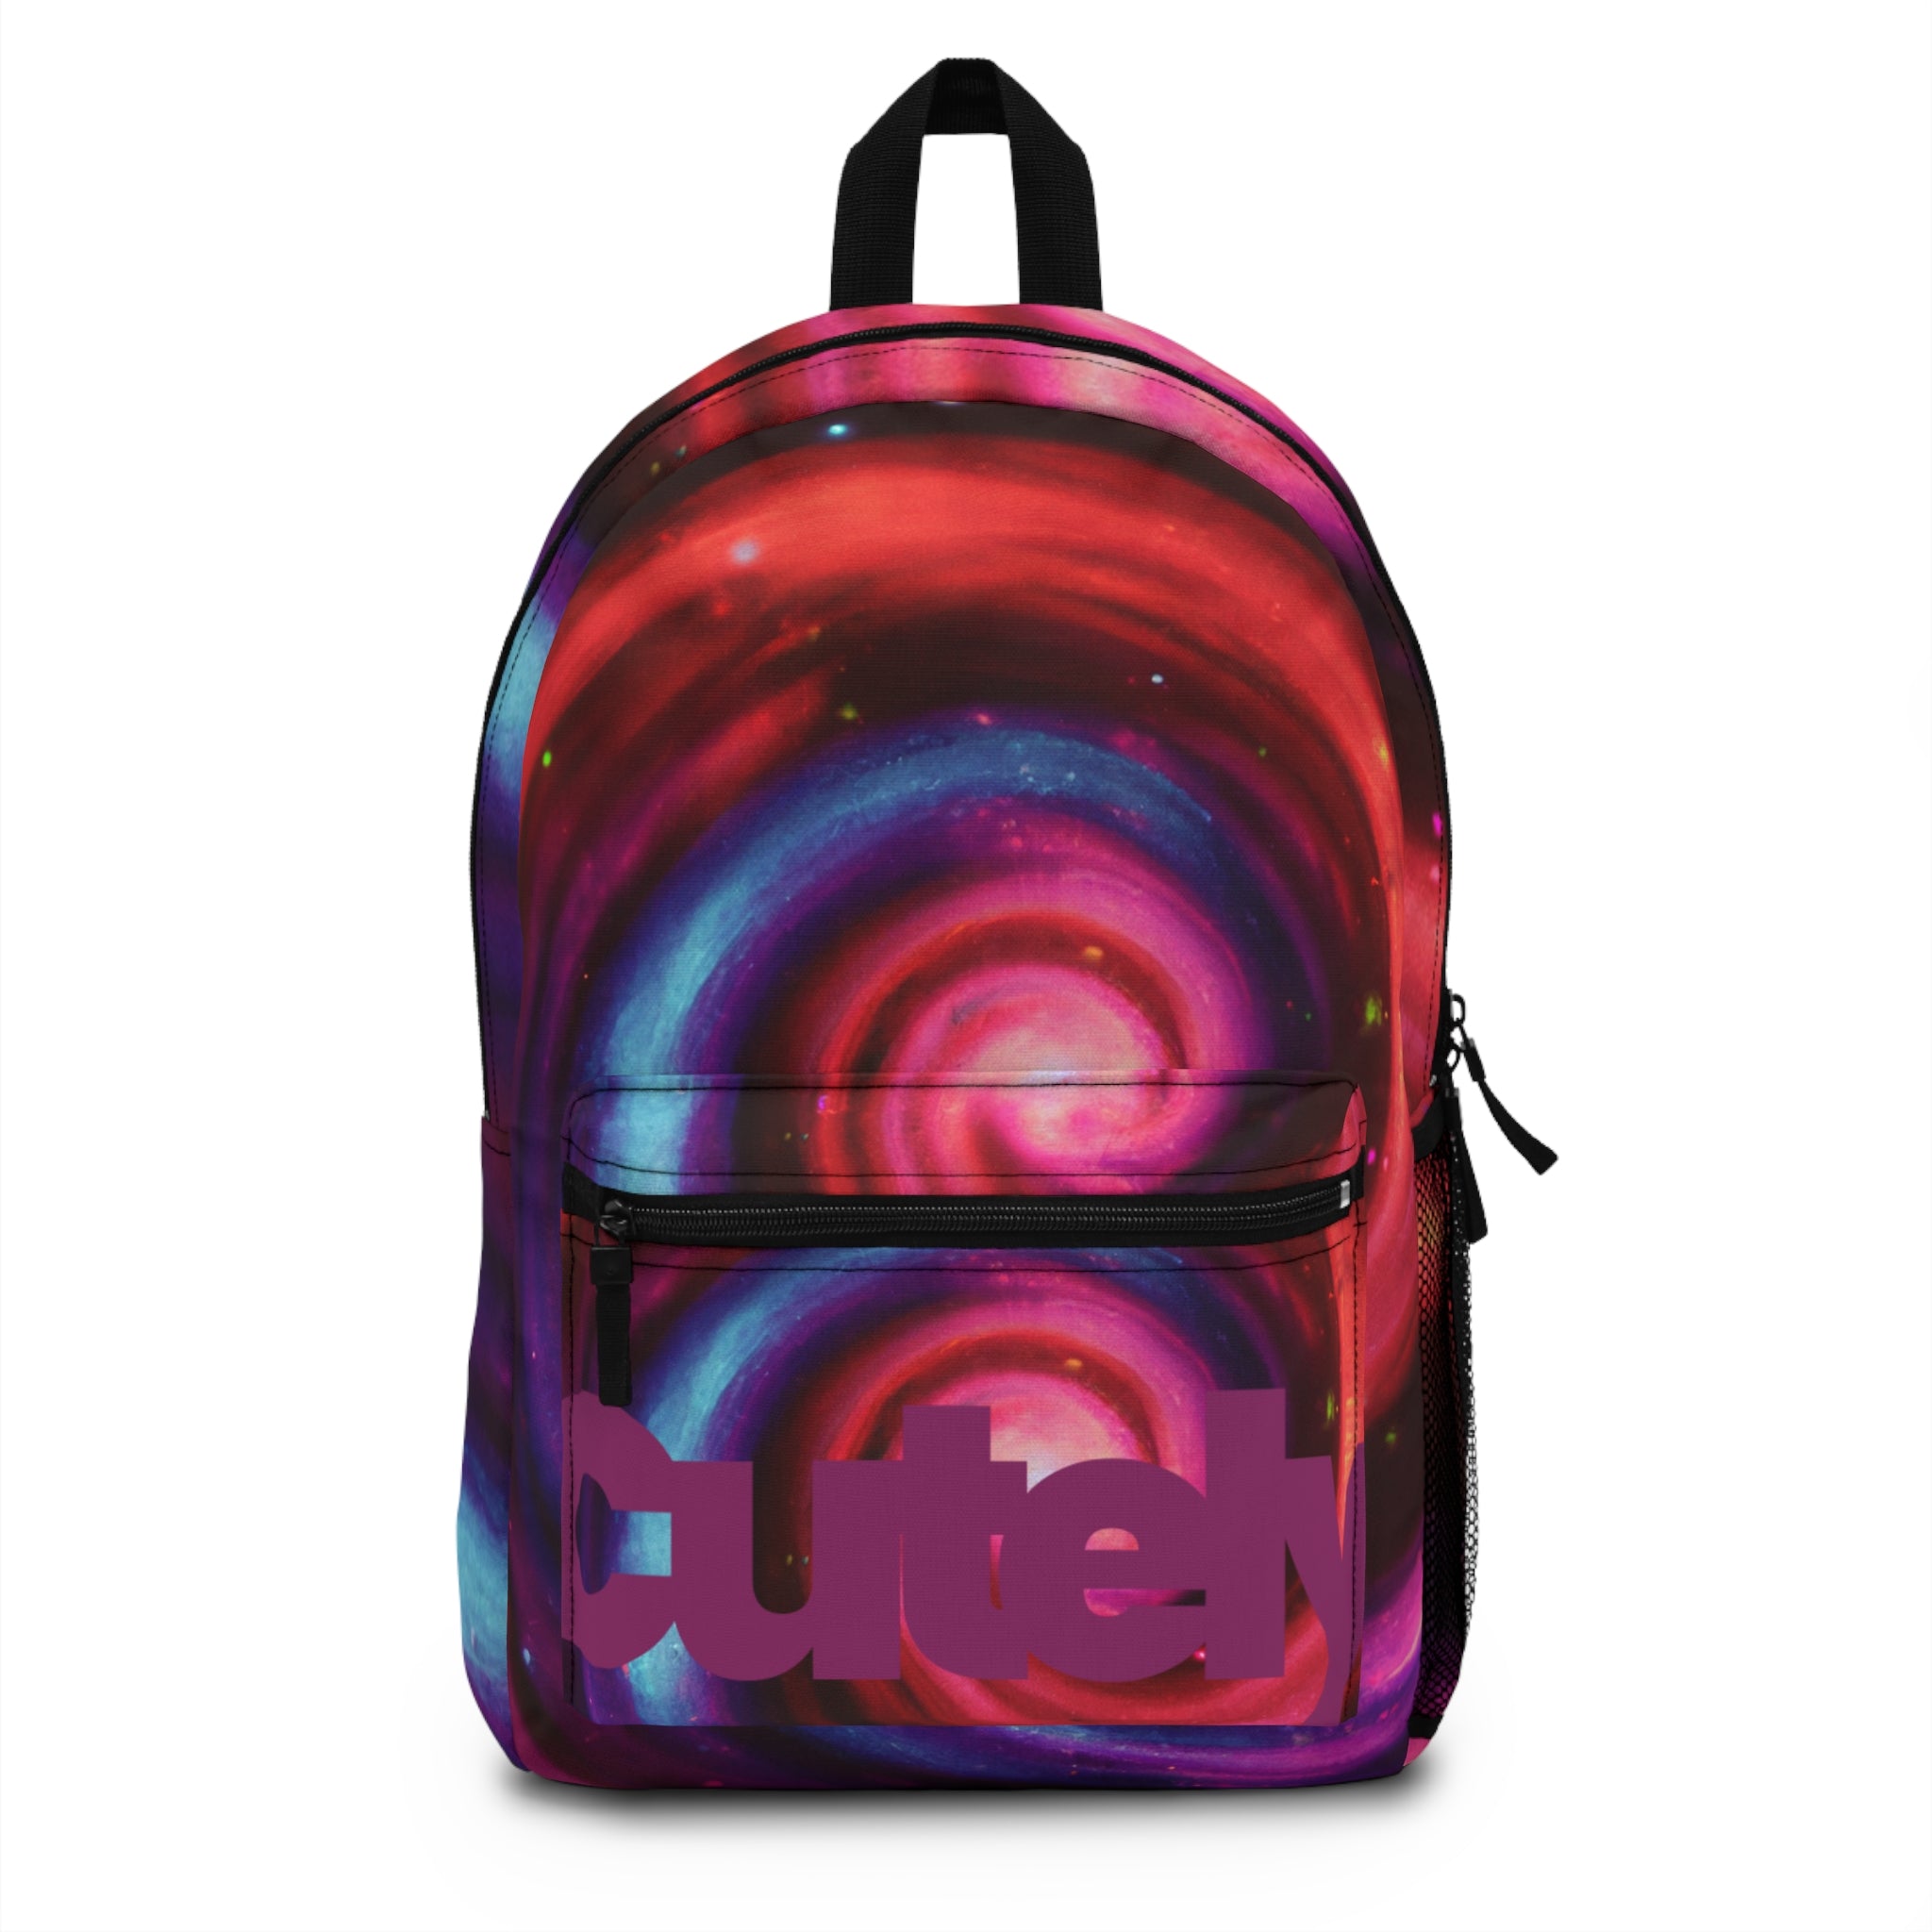 "Beyond Da Hops: Bumpy Bags 2 tha Cosmos"- Backpack